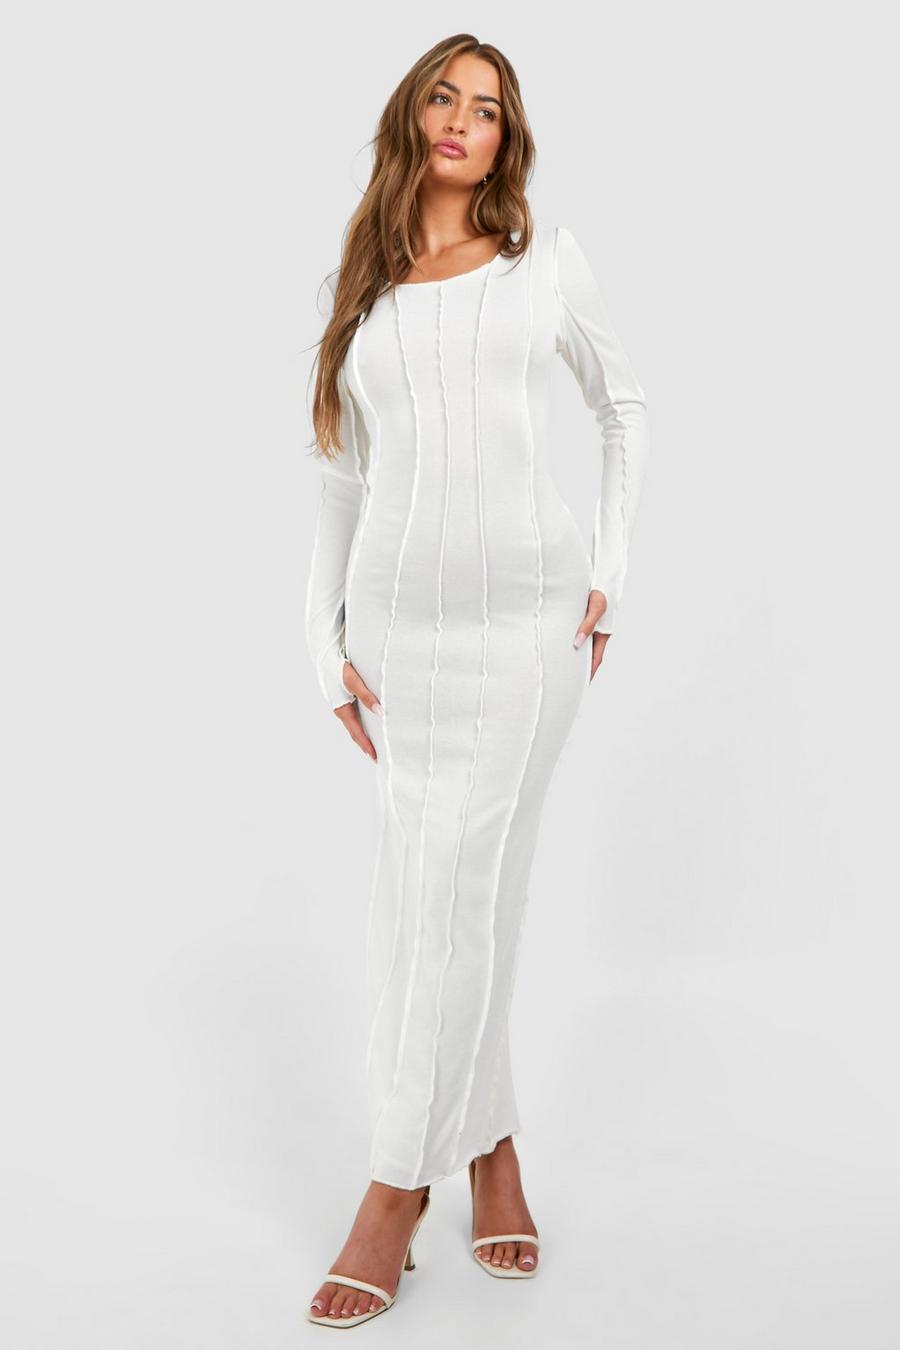 Cream Ruched Bardot Long Sleeve Modal Mini Dress